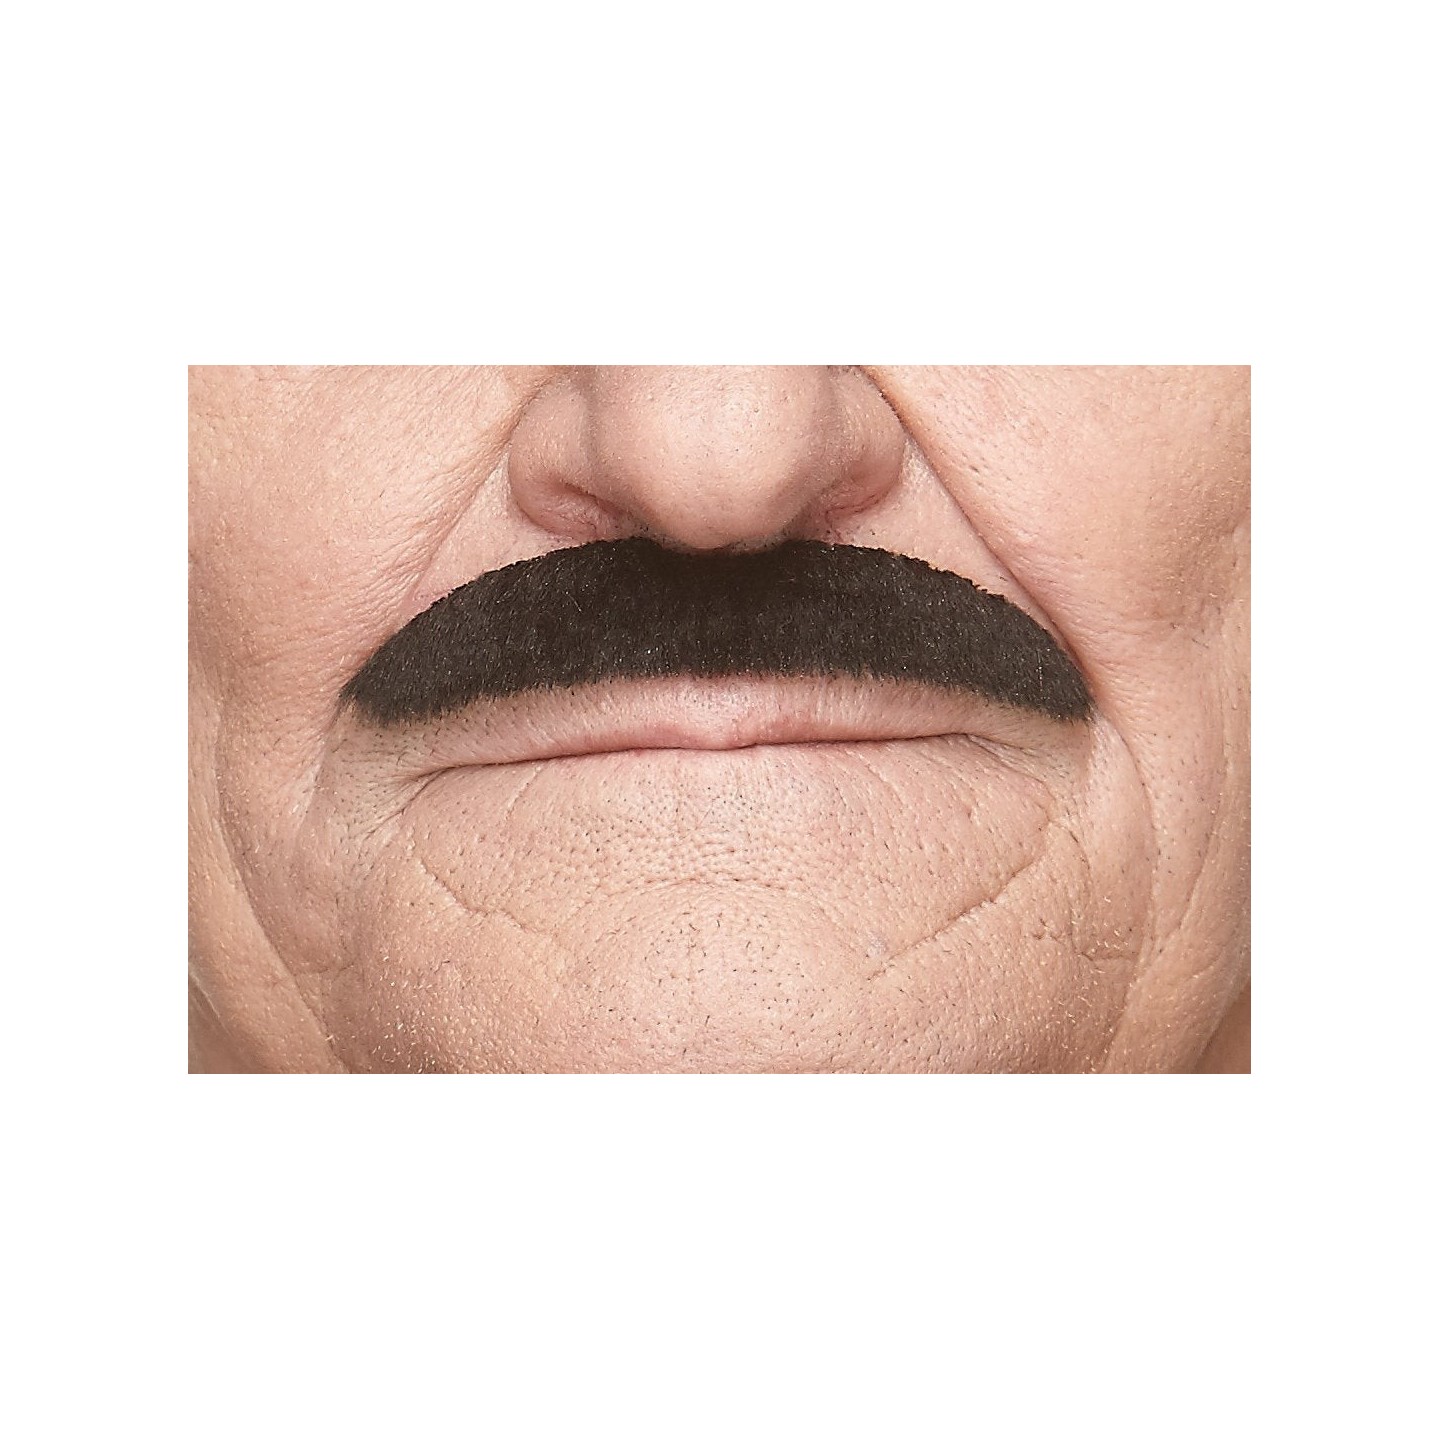 zwarte plaksnor nepsnor valse snor mustaches